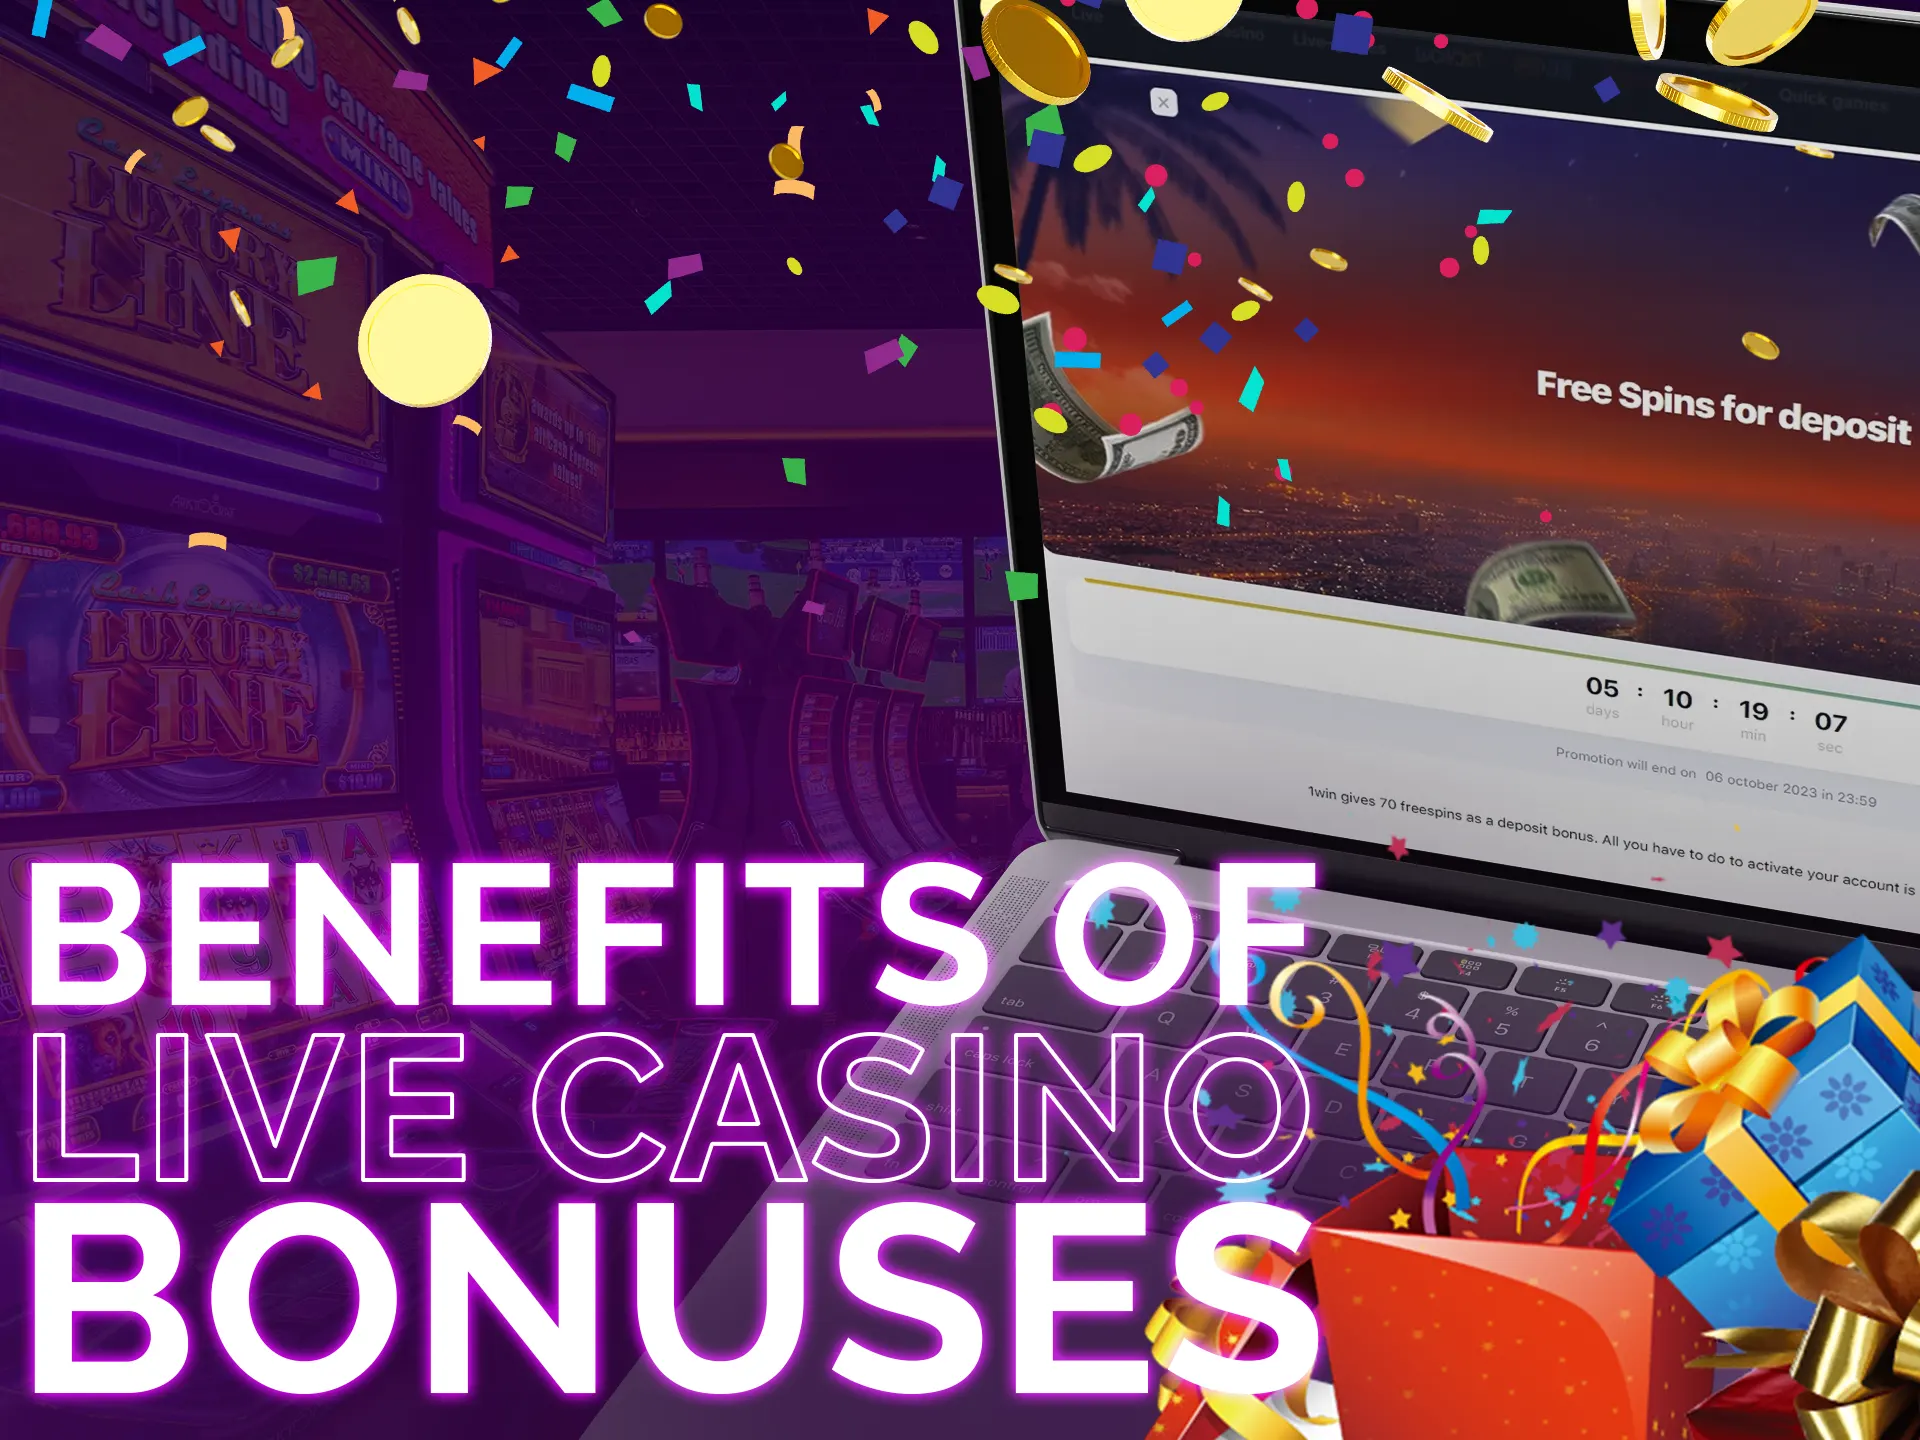 Check the benefits of live casino bonuses.